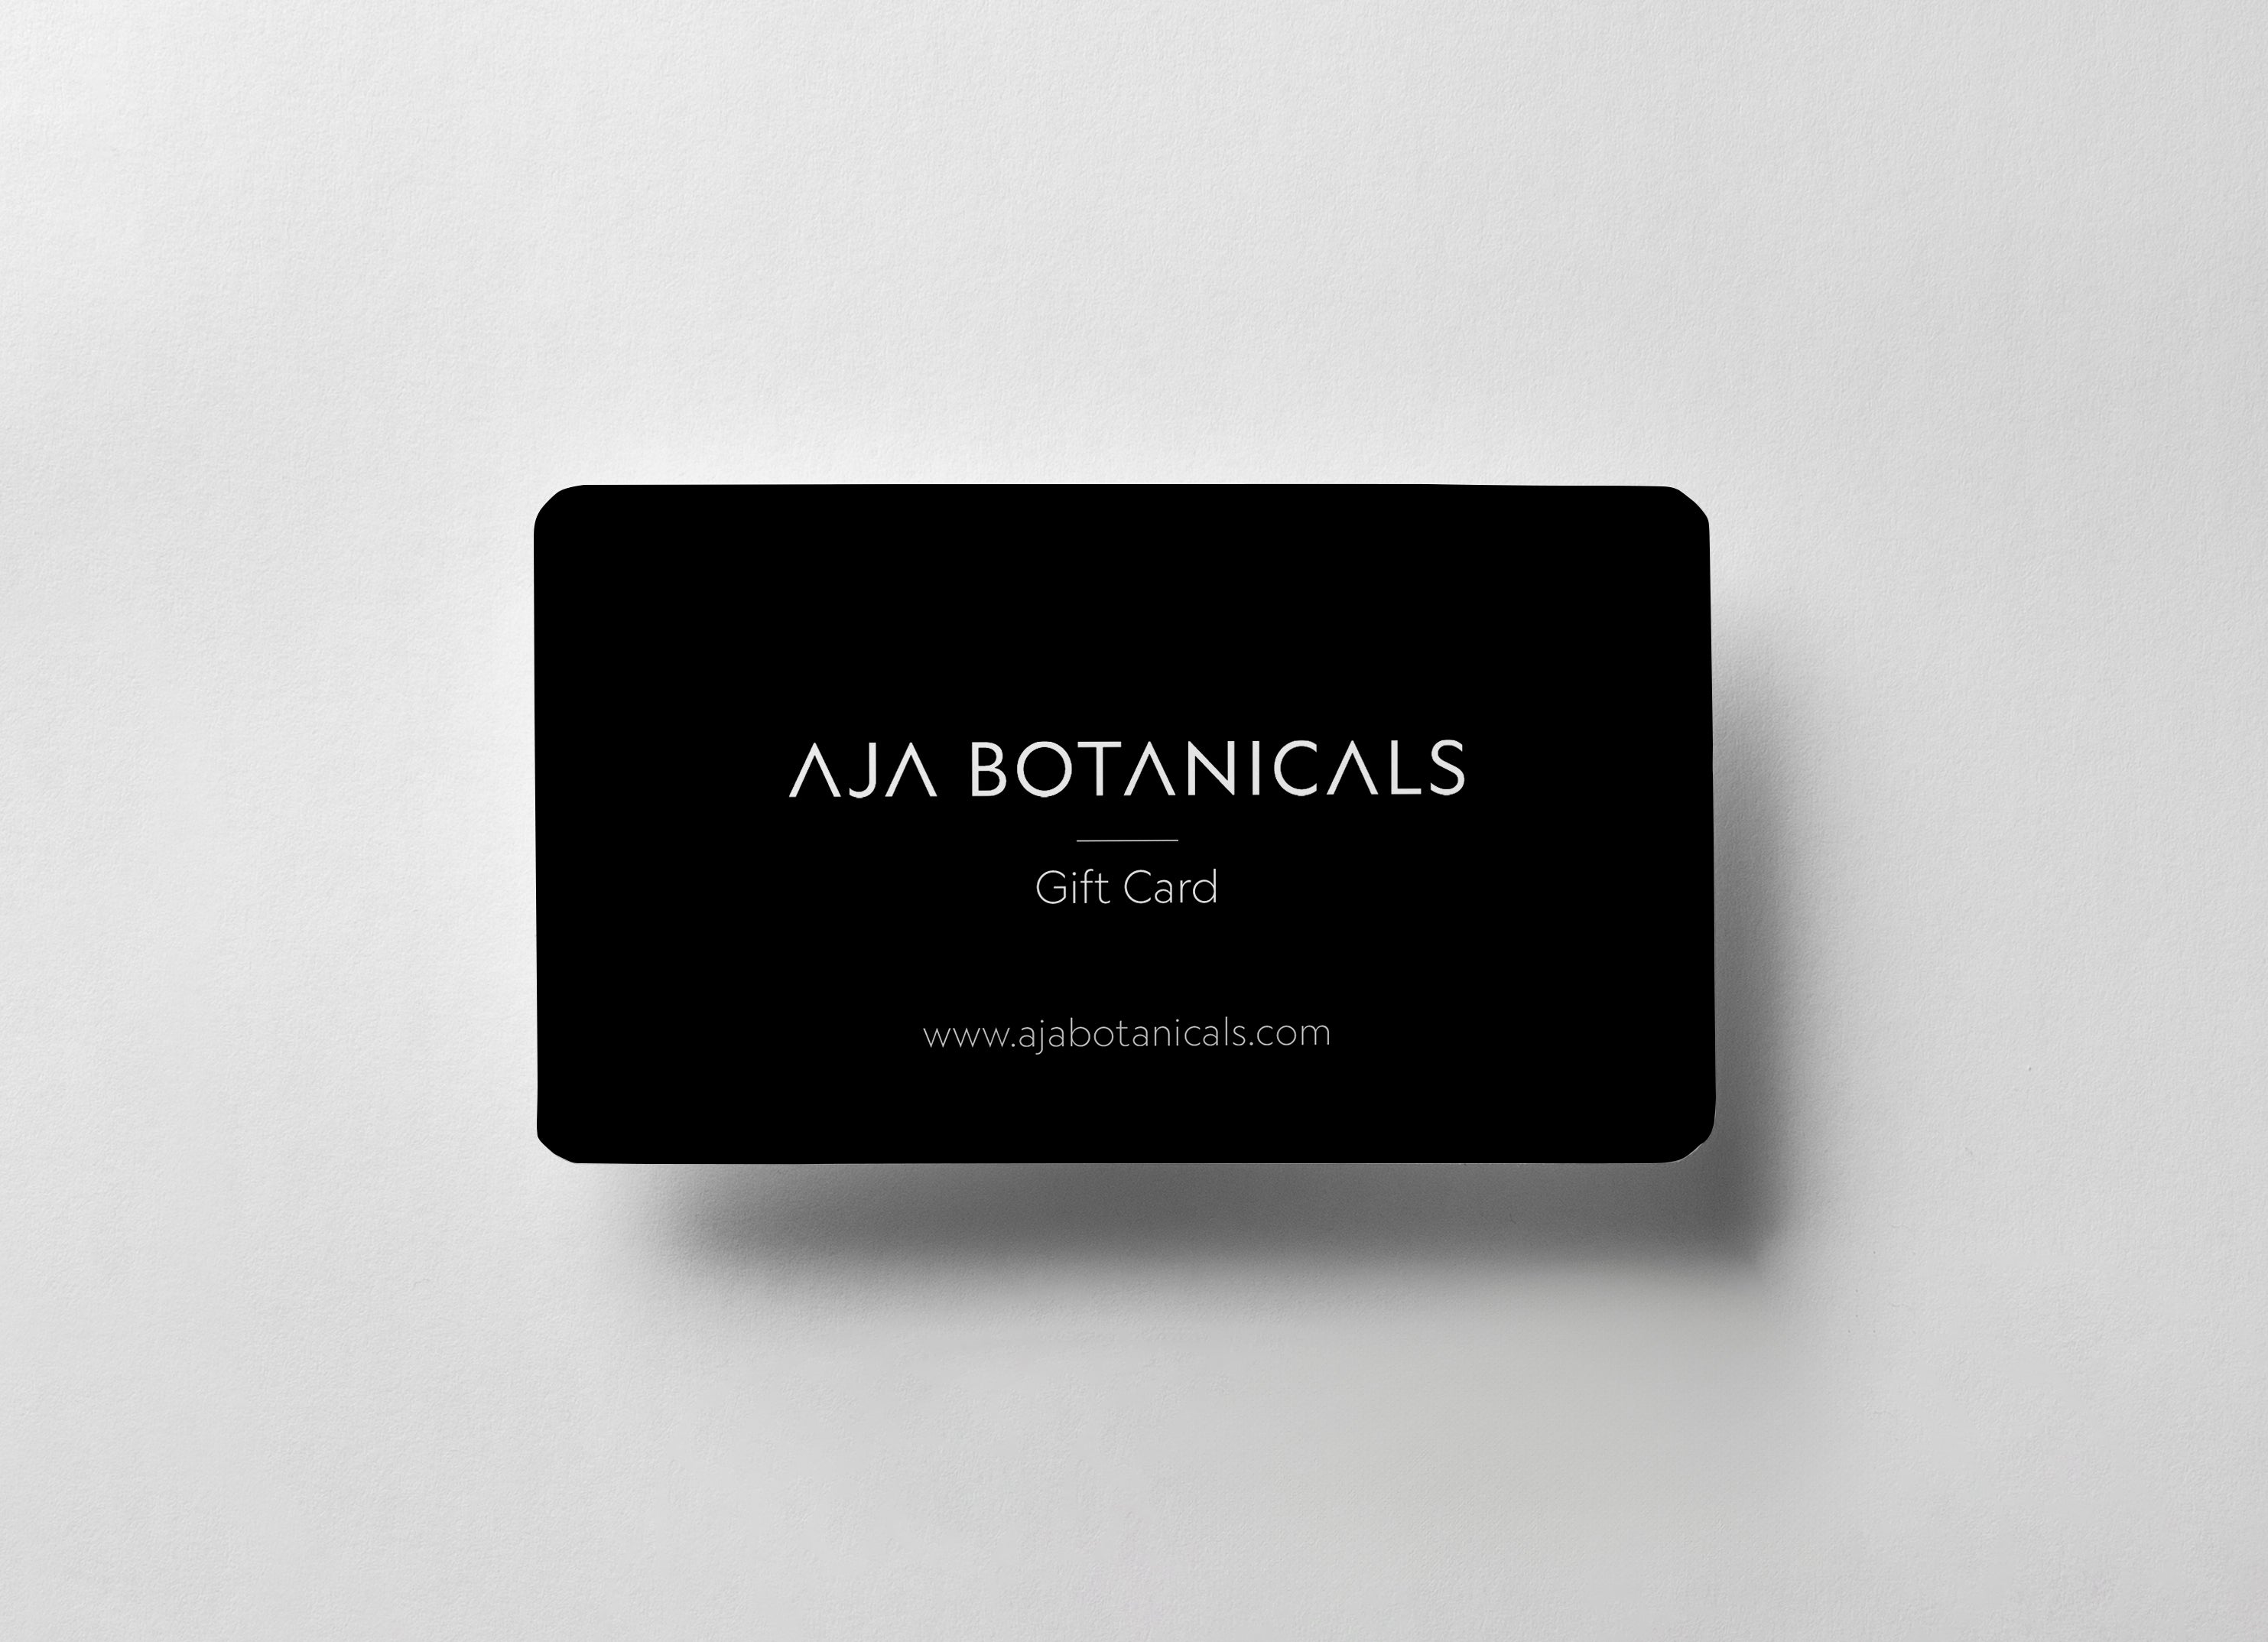 AJA Botanicals Gift Card